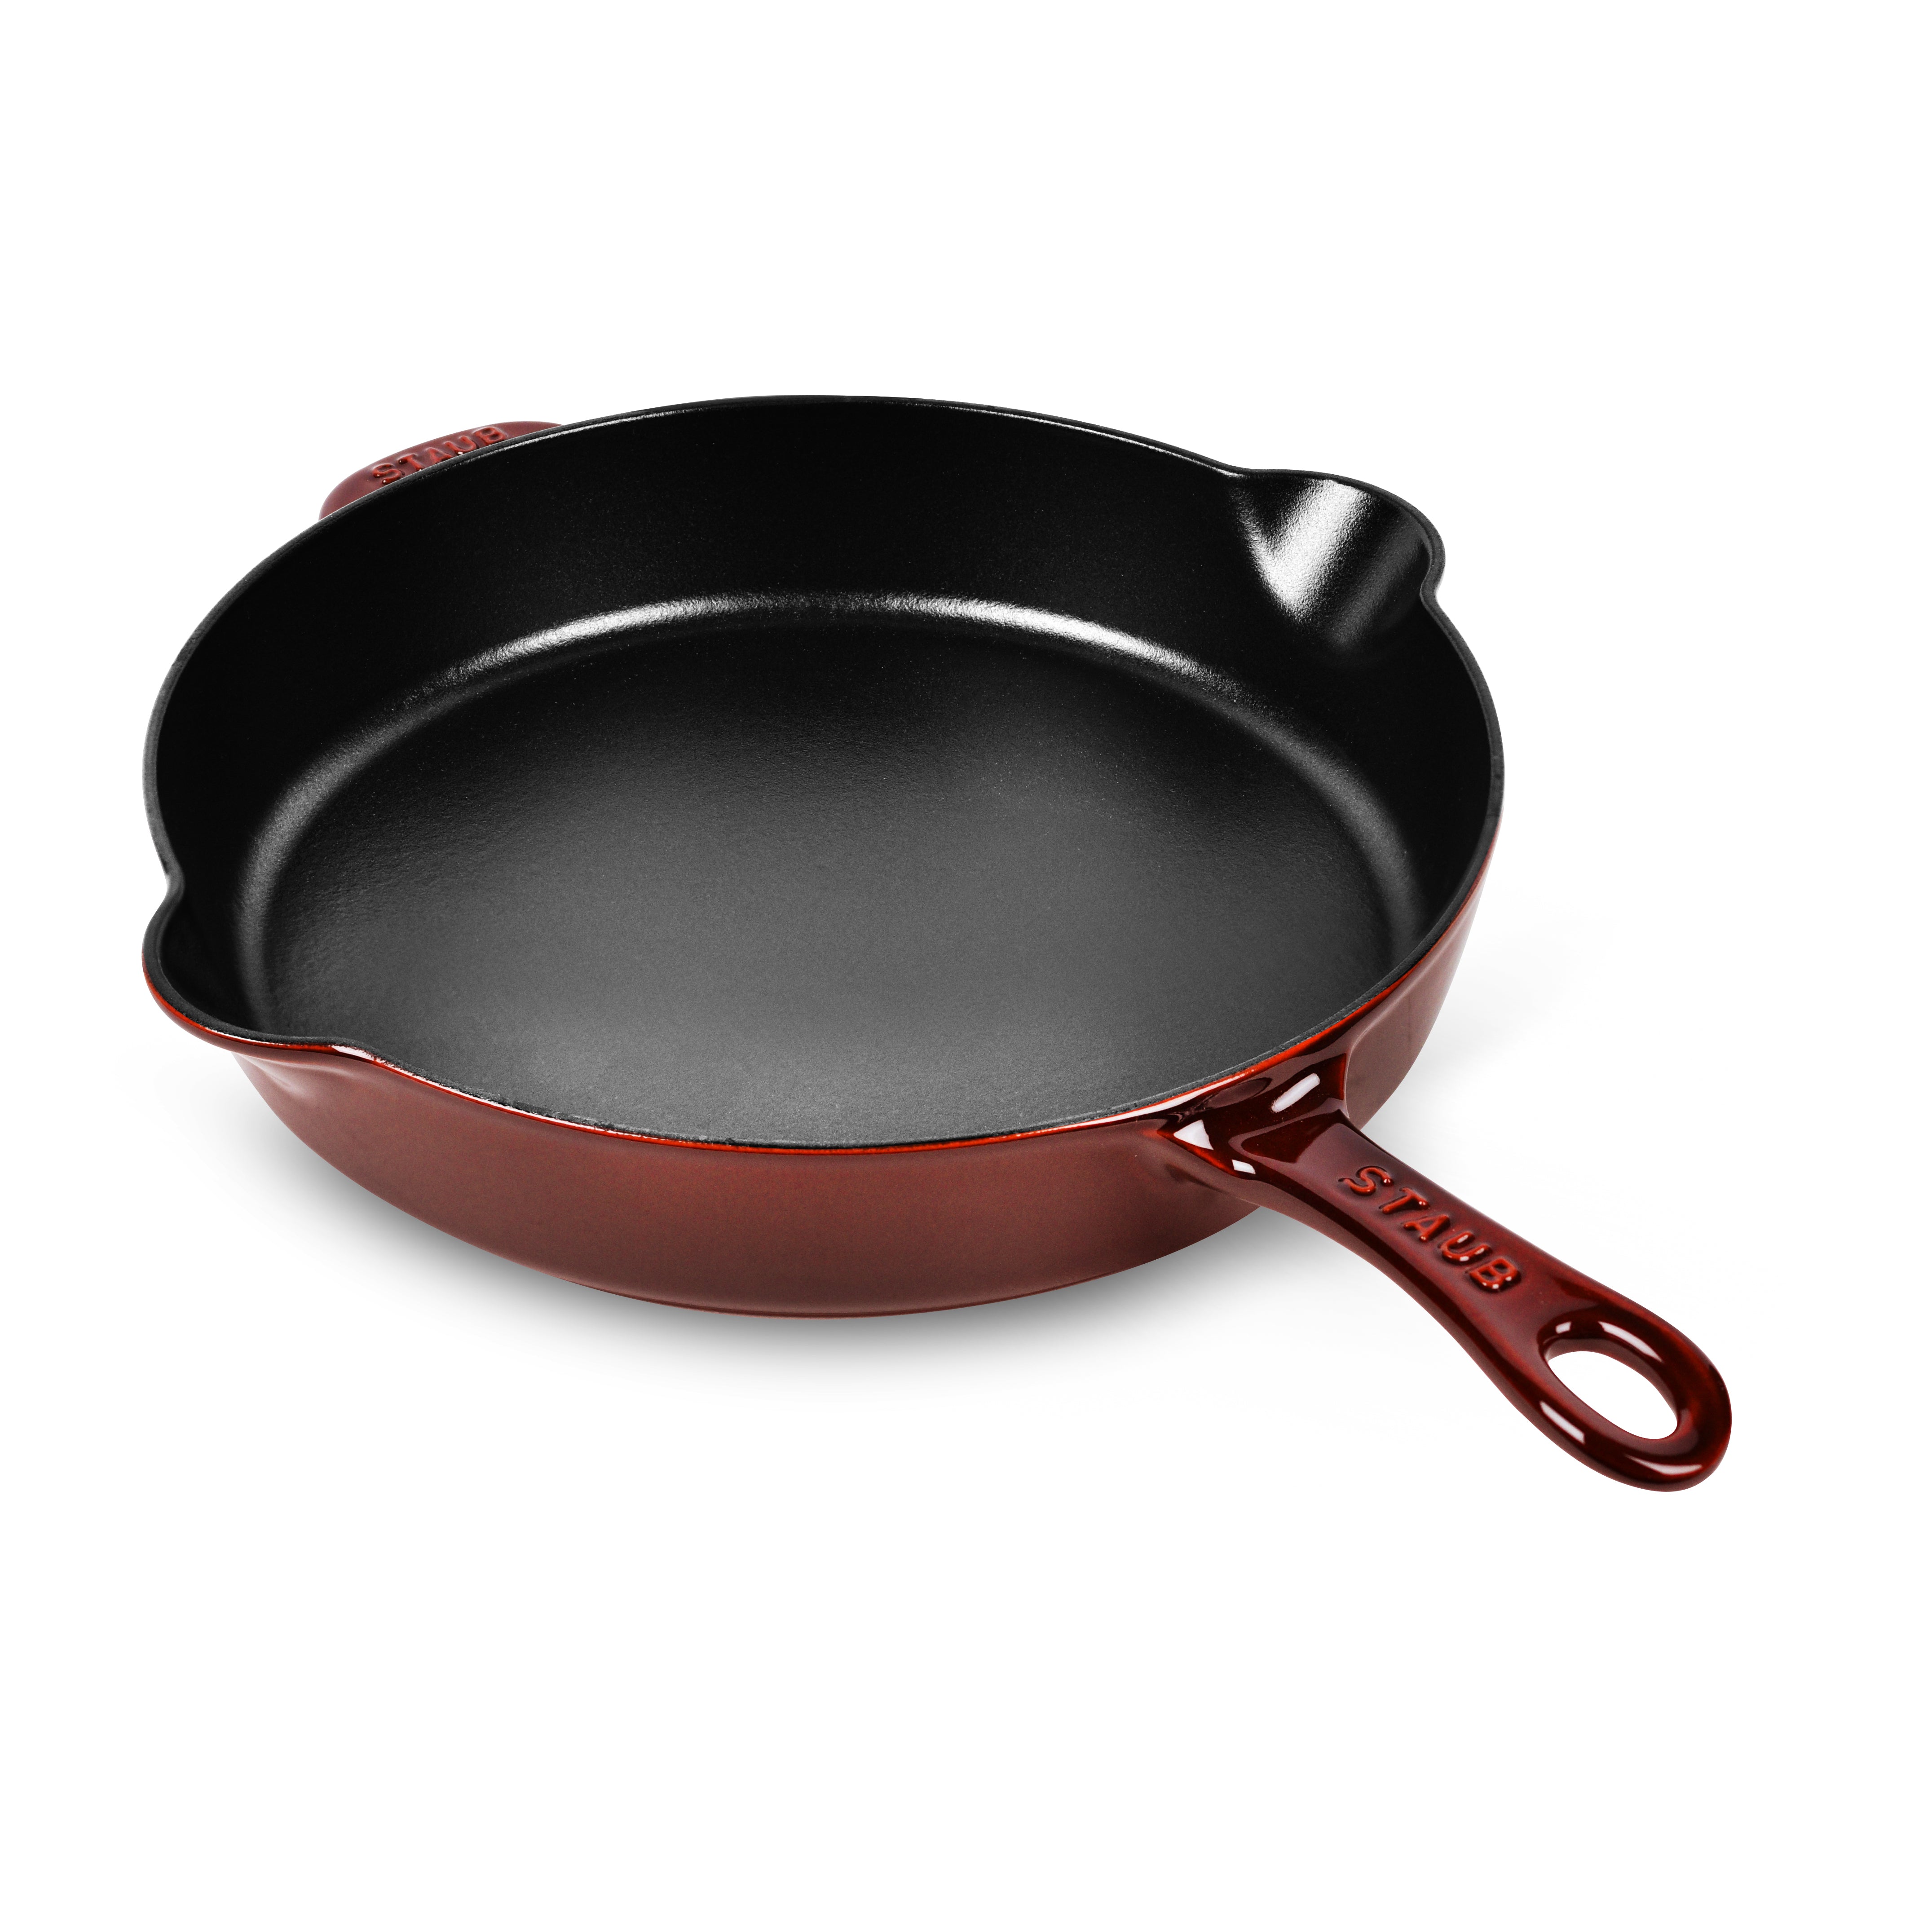 Staub Cast-Iron Frying Pan